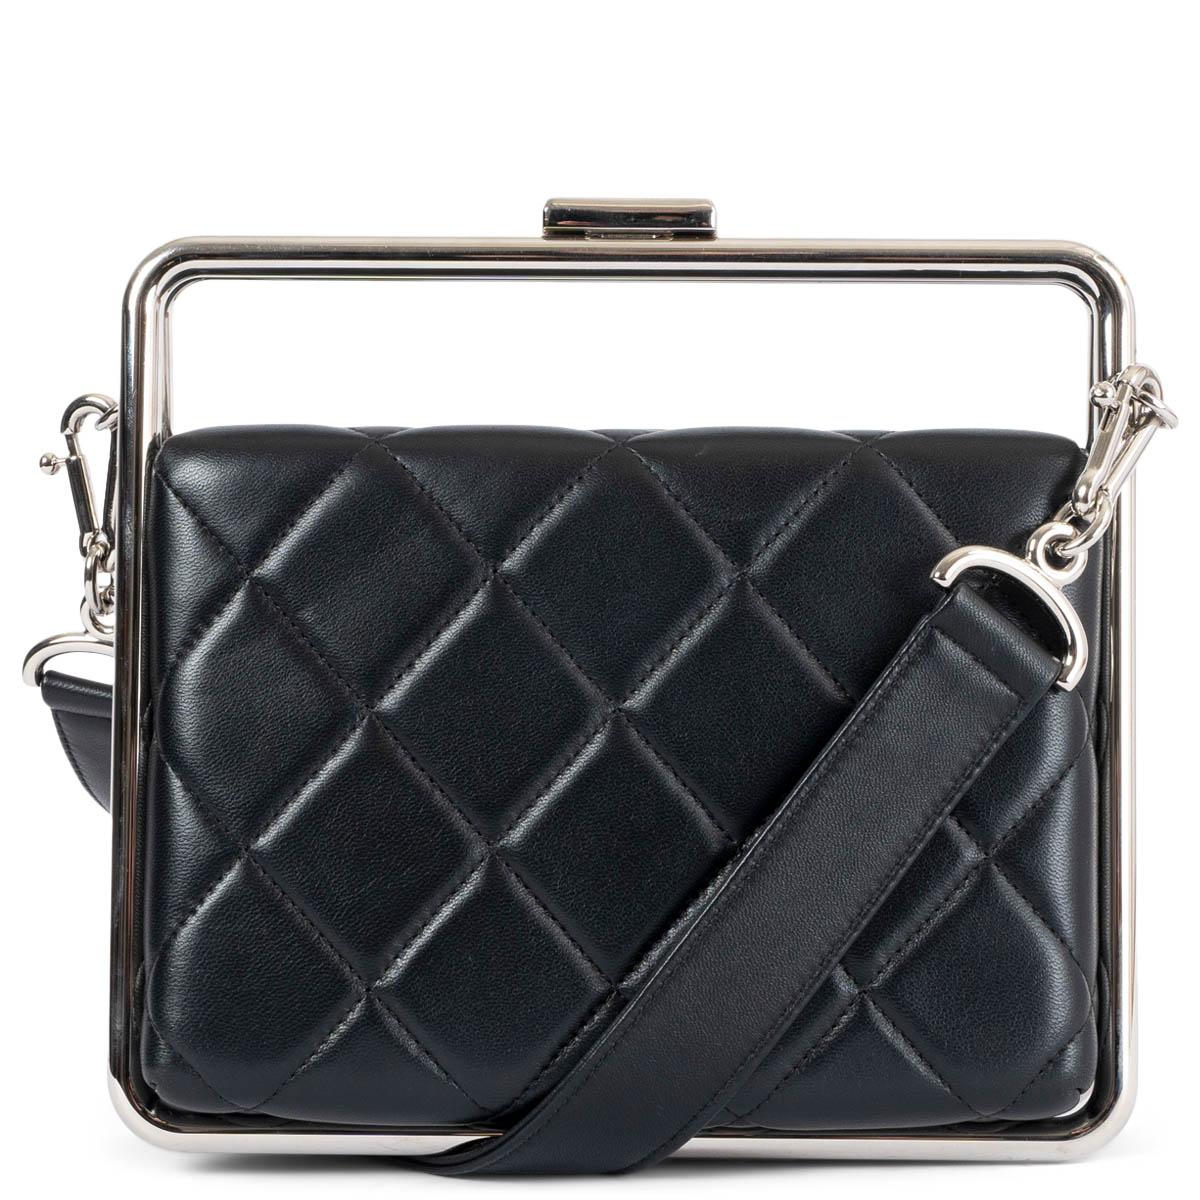 Black CHANEL black leather 2020 20S METAL BAR FRAME CLUTCH W STRAP Bag For Sale